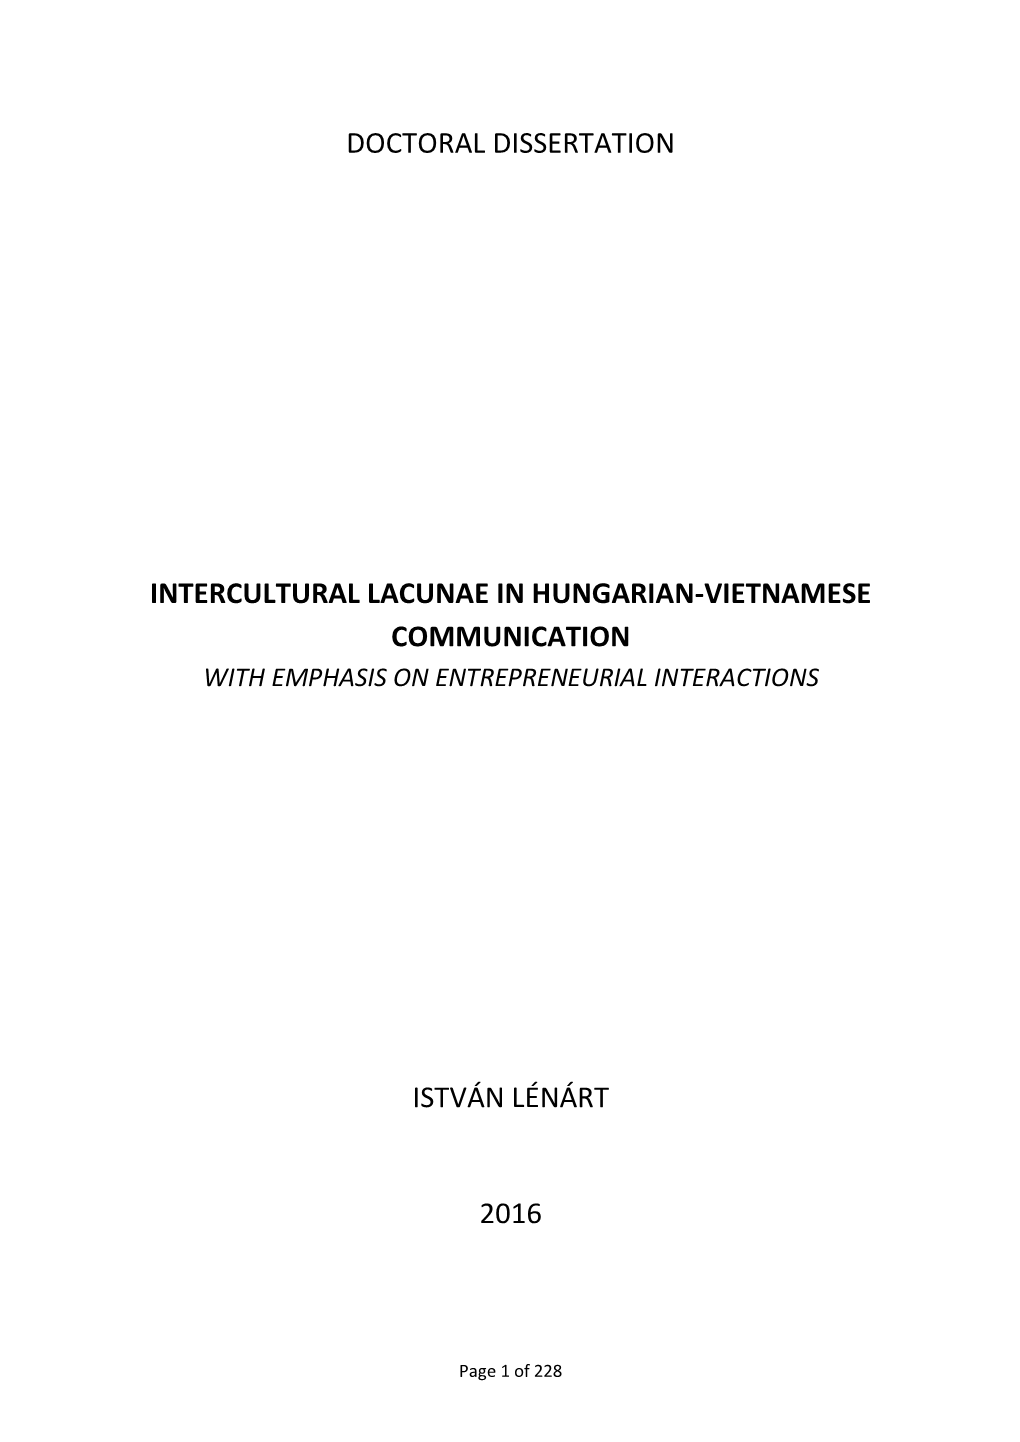 Doctoral Dissertation Intercultural Lacunae in Hungarian-Vietnamese